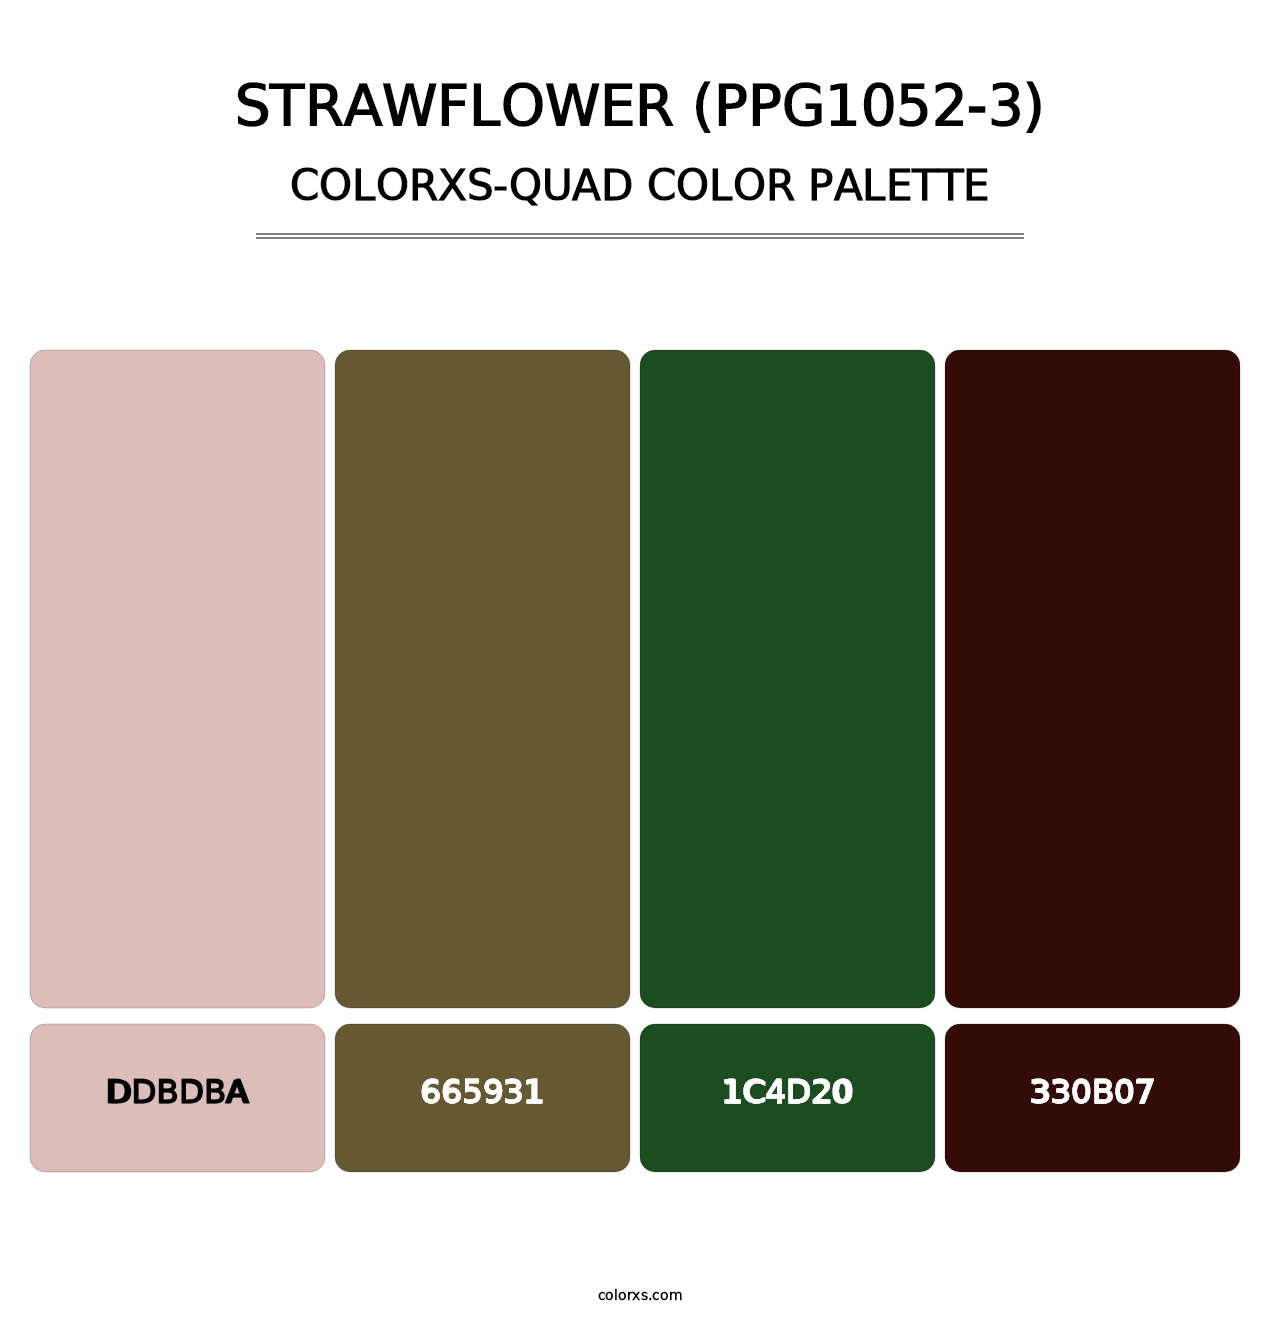 Strawflower (PPG1052-3) - Colorxs Quad Palette